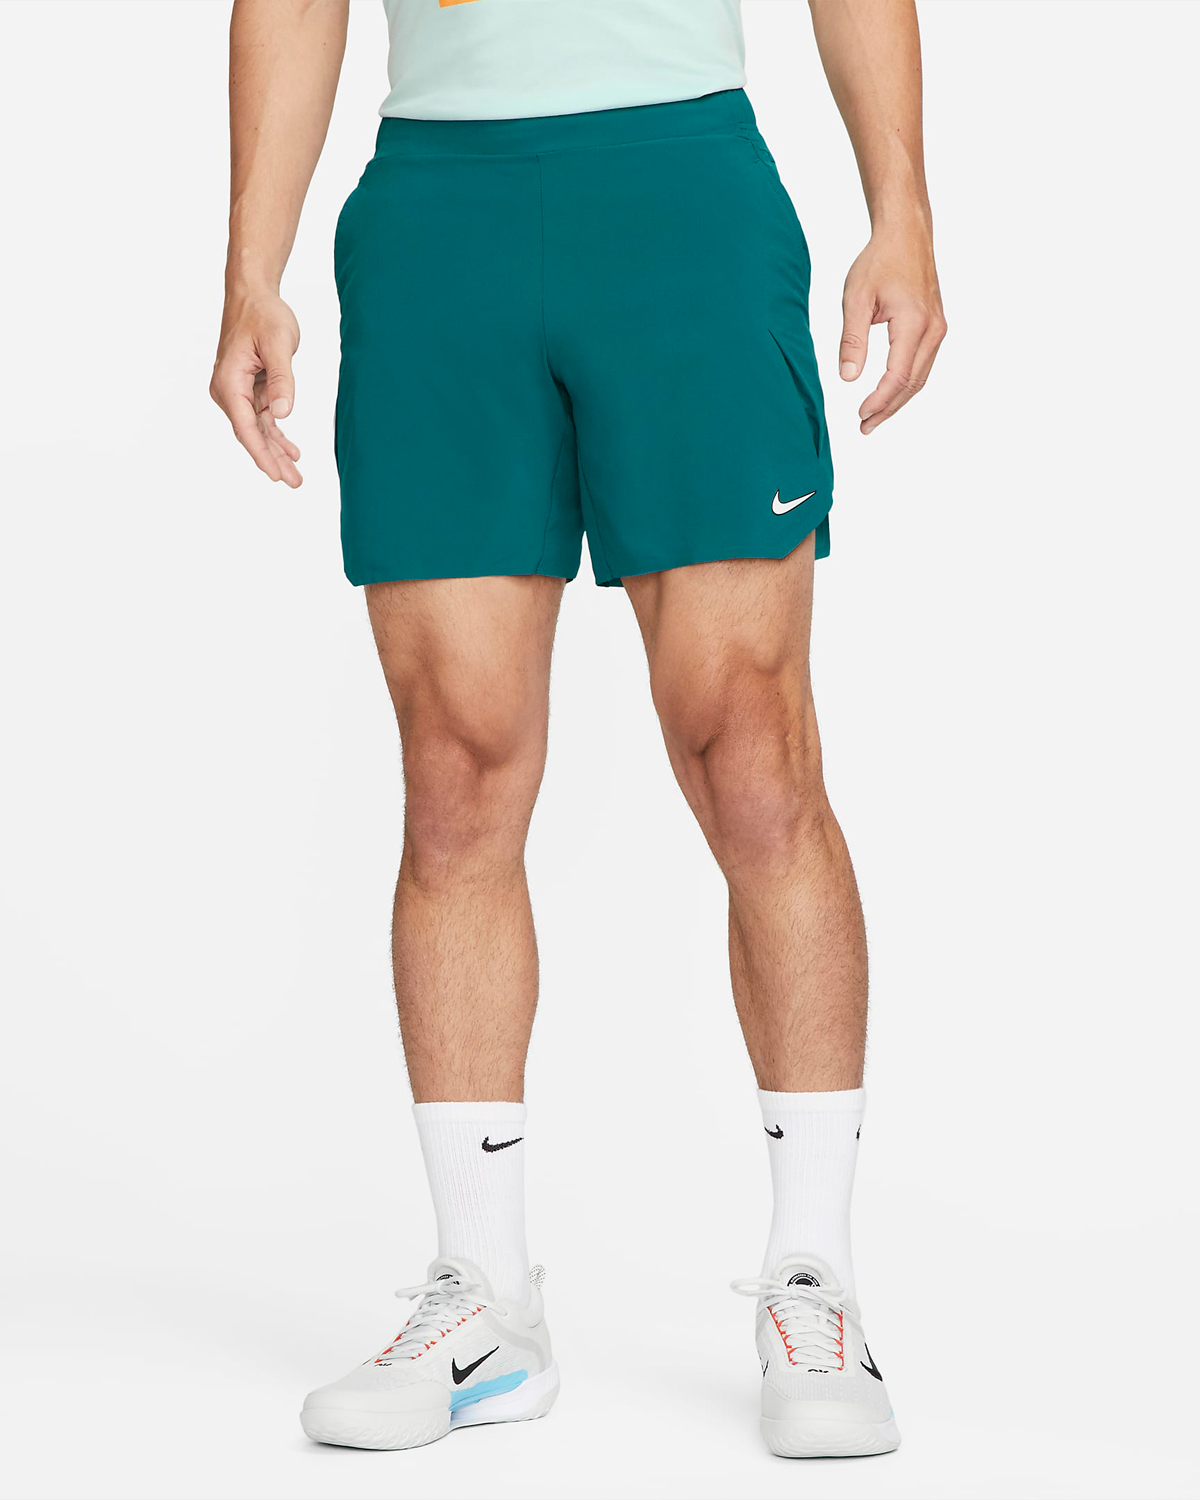 Nike-Court-Tennis-Shorts-Geode-Teal-1